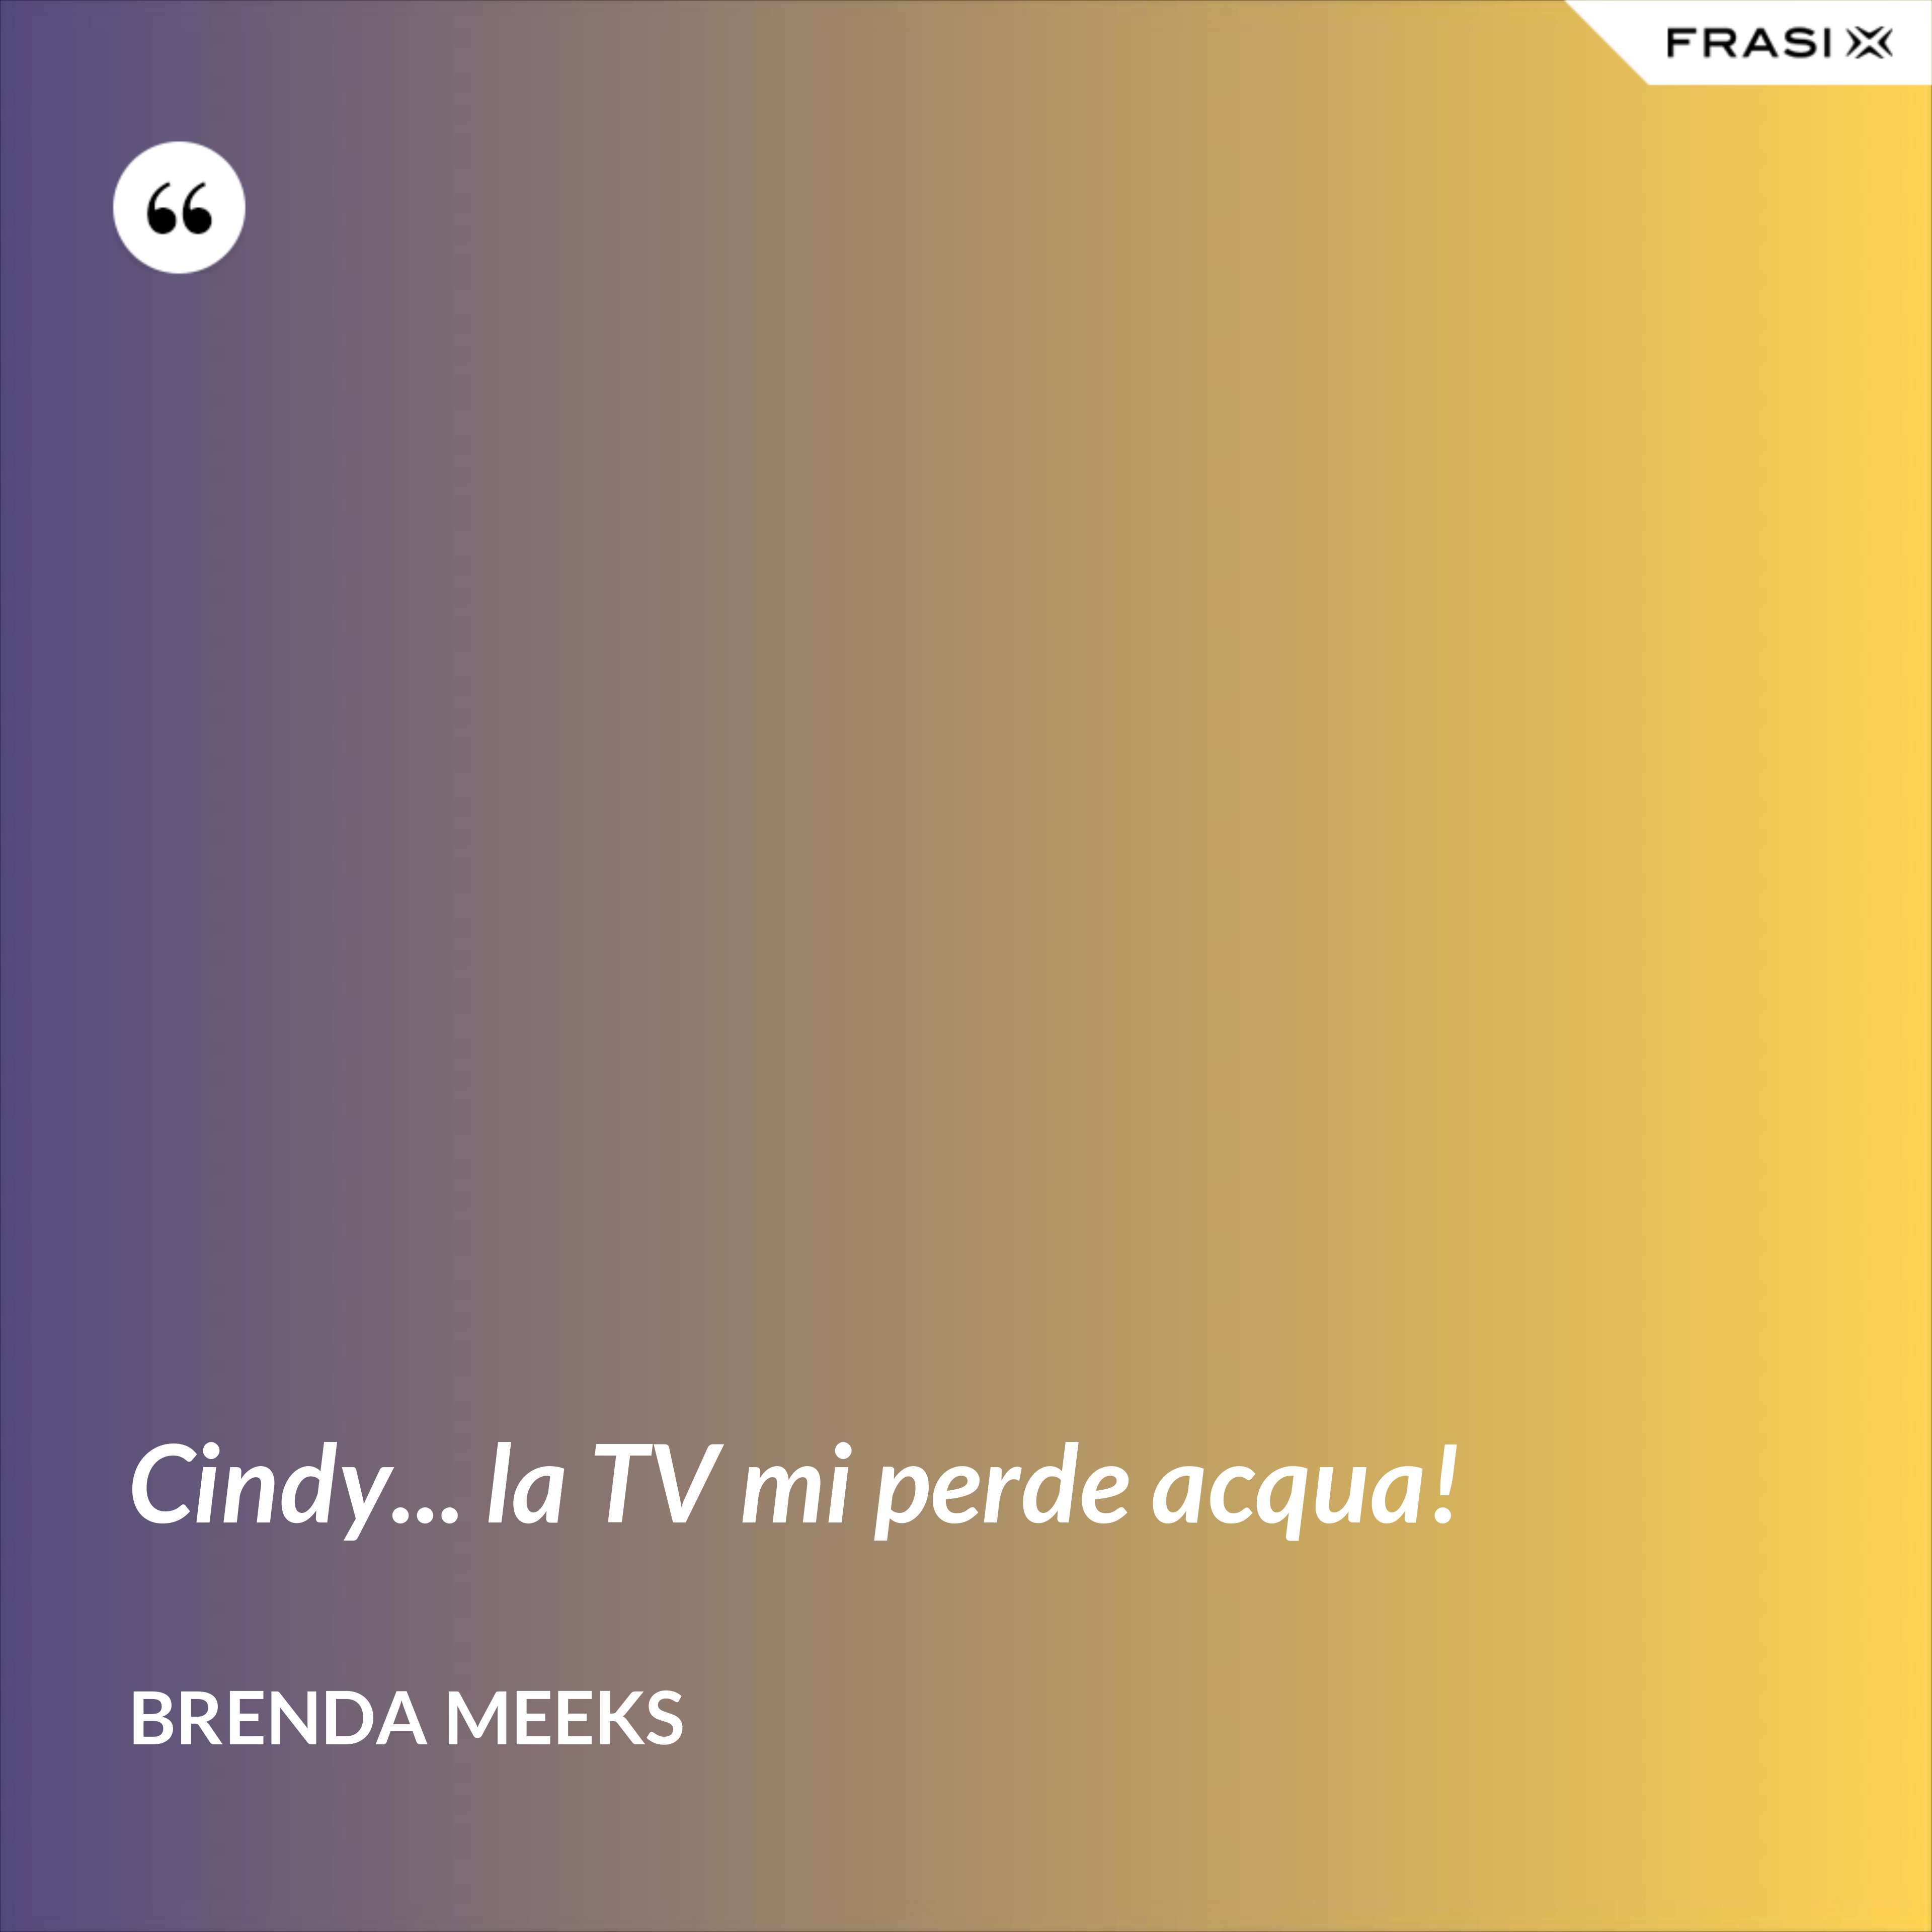 Cindy... la TV mi perde acqua! - Brenda Meeks